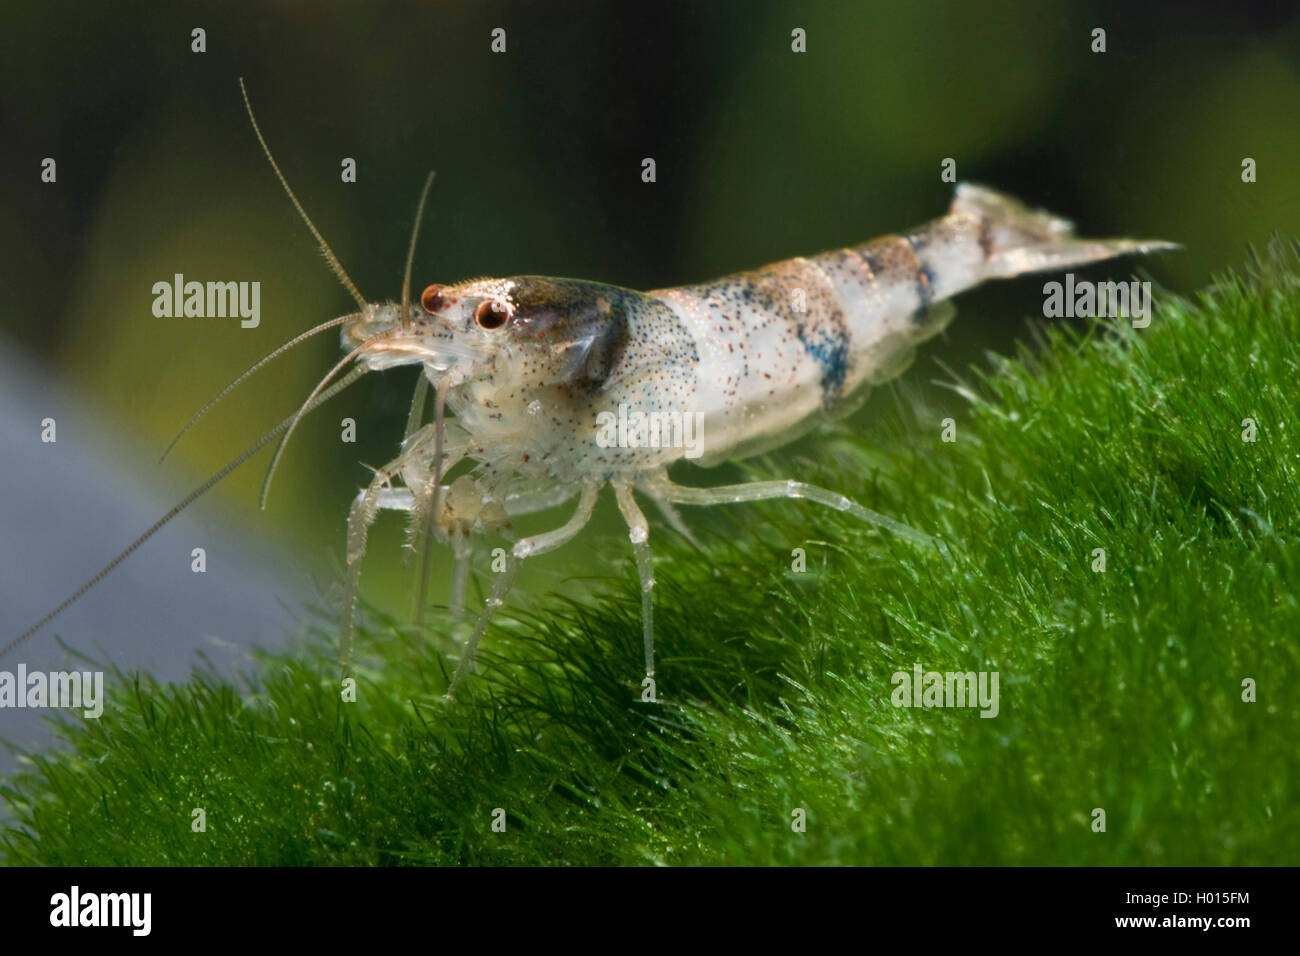 bumblebee shrimp, bumble bee shrimp (Caridina breviata), in aquarium Stock Photo